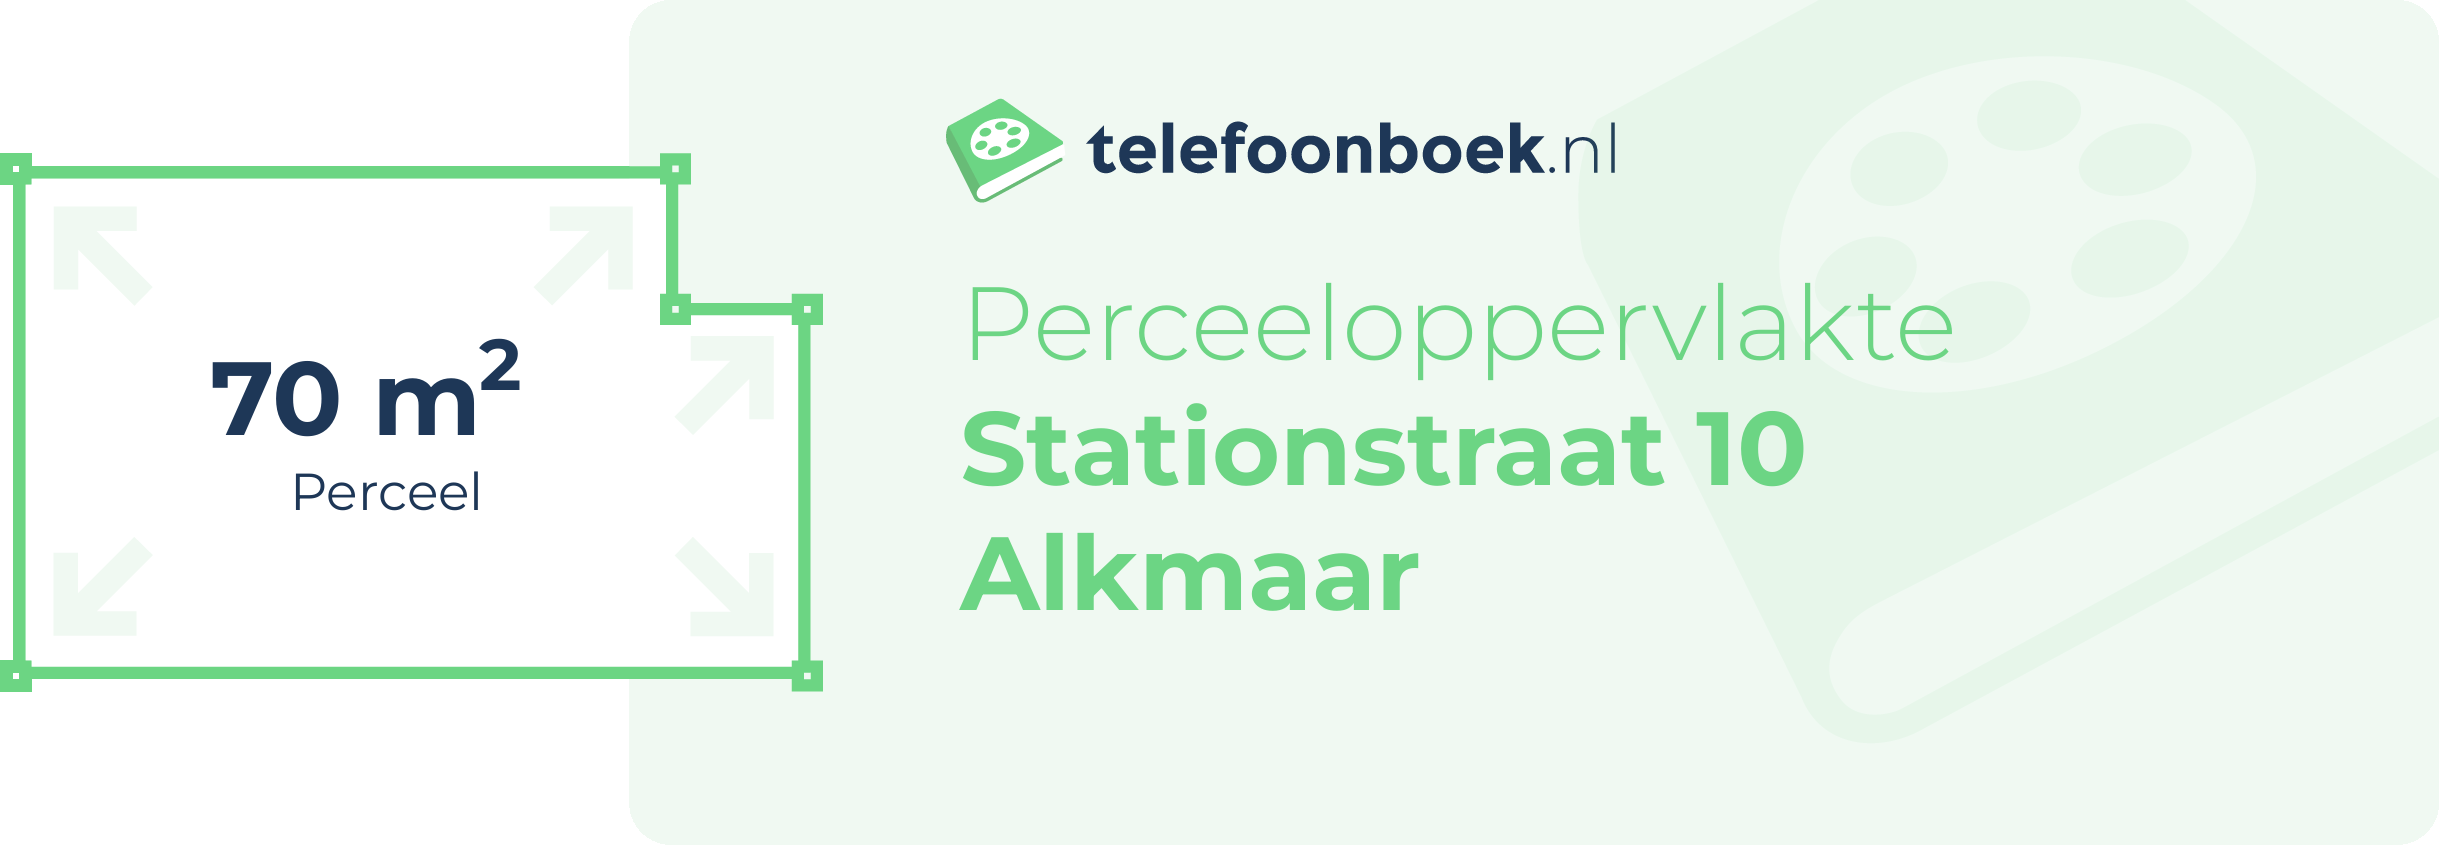 Perceeloppervlakte Stationstraat 10 Alkmaar